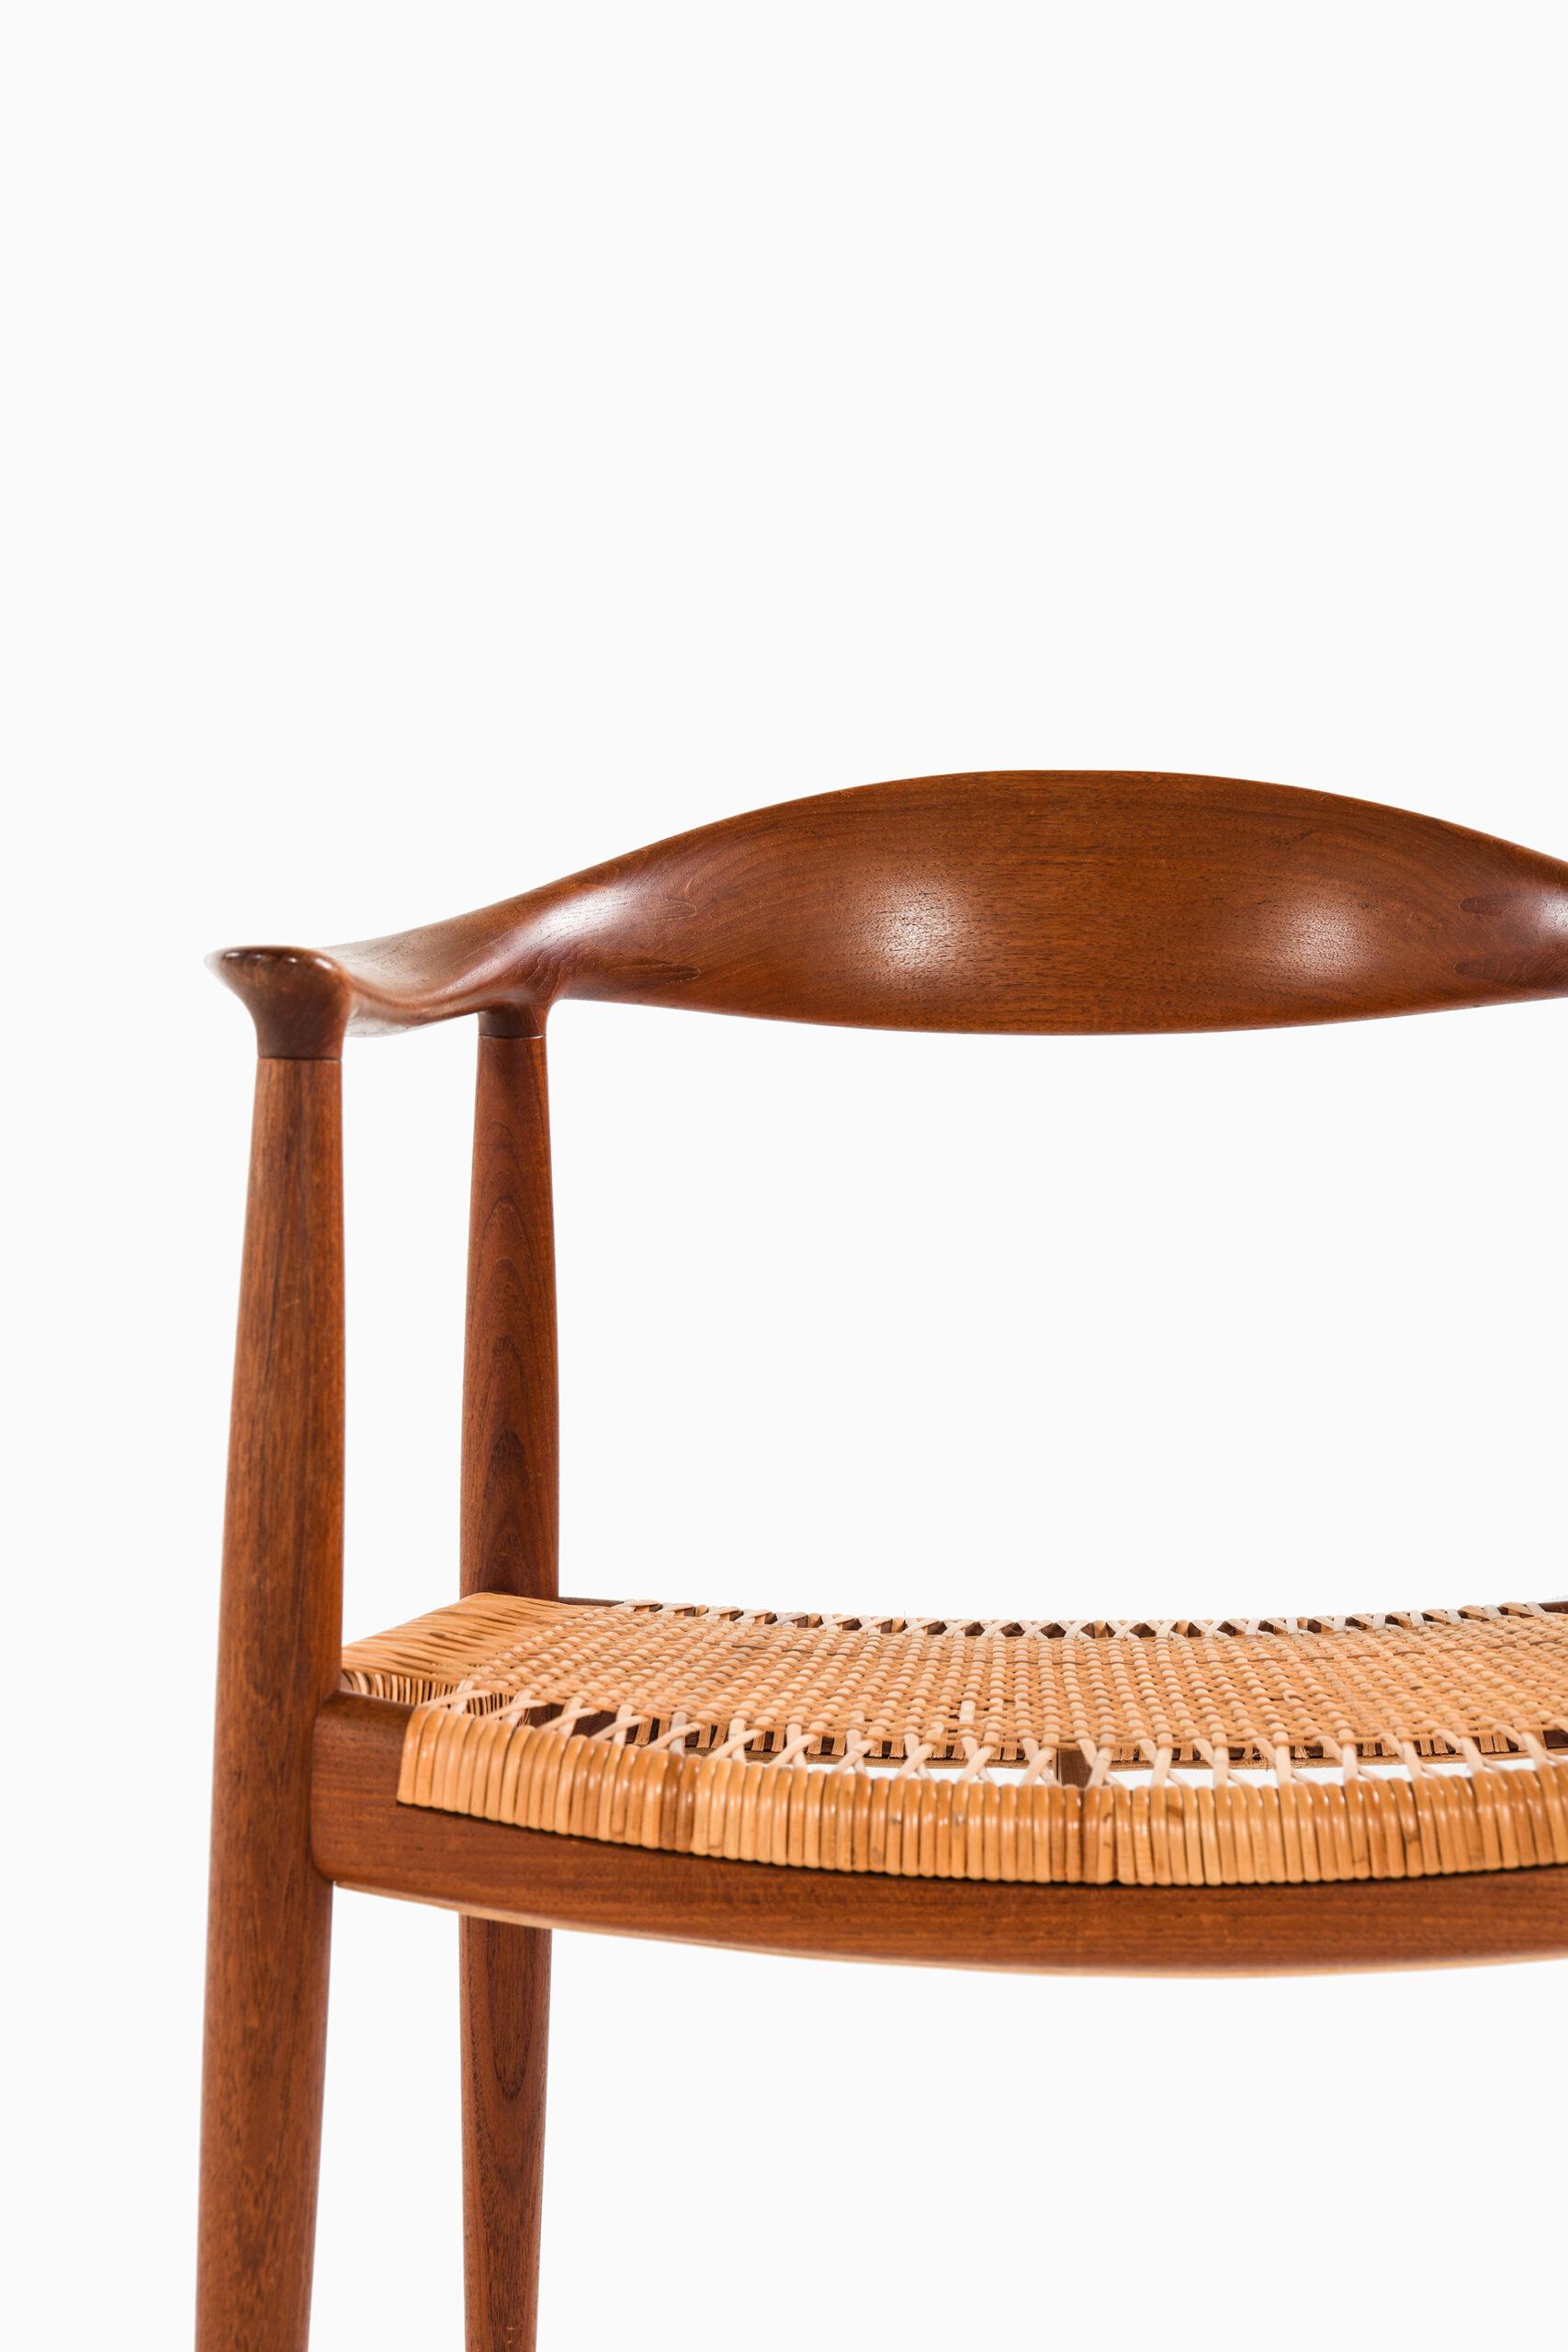 Rare armchair model JH-501 / The Chair designed by Hans Wegner. Produced by Johannes Hansen in Denmark.